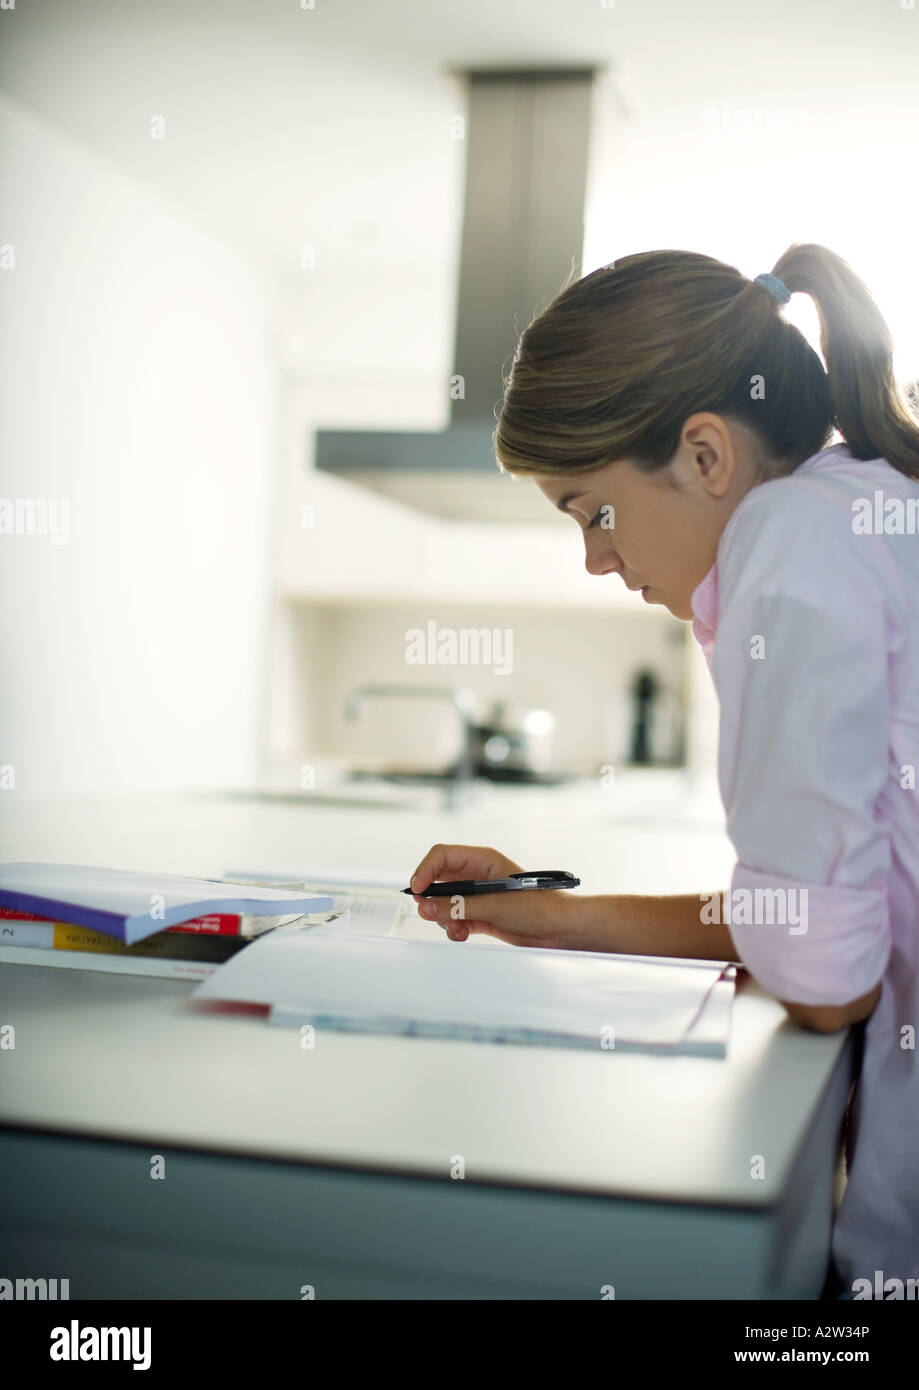 Teen girl doing homework in kitchen Stock Photo